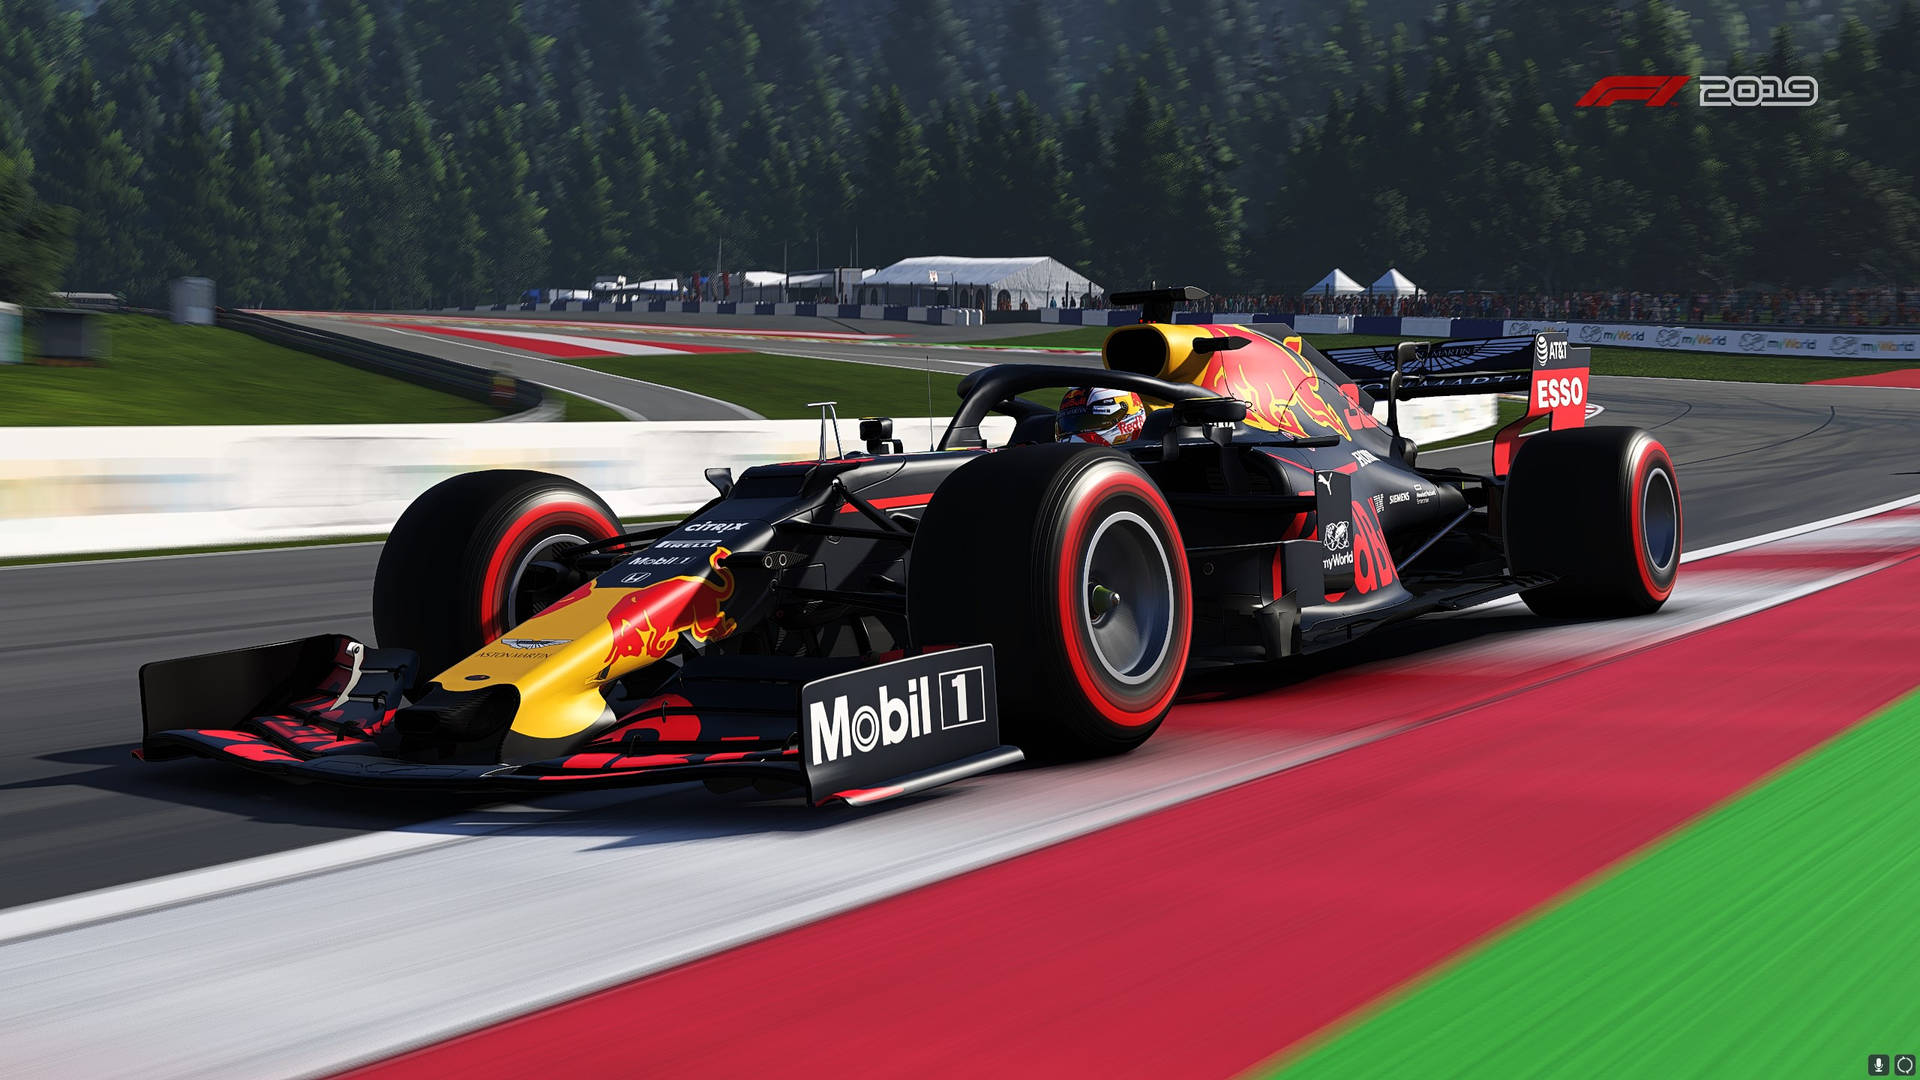 Albon's #23 Car In F1 2019 Background